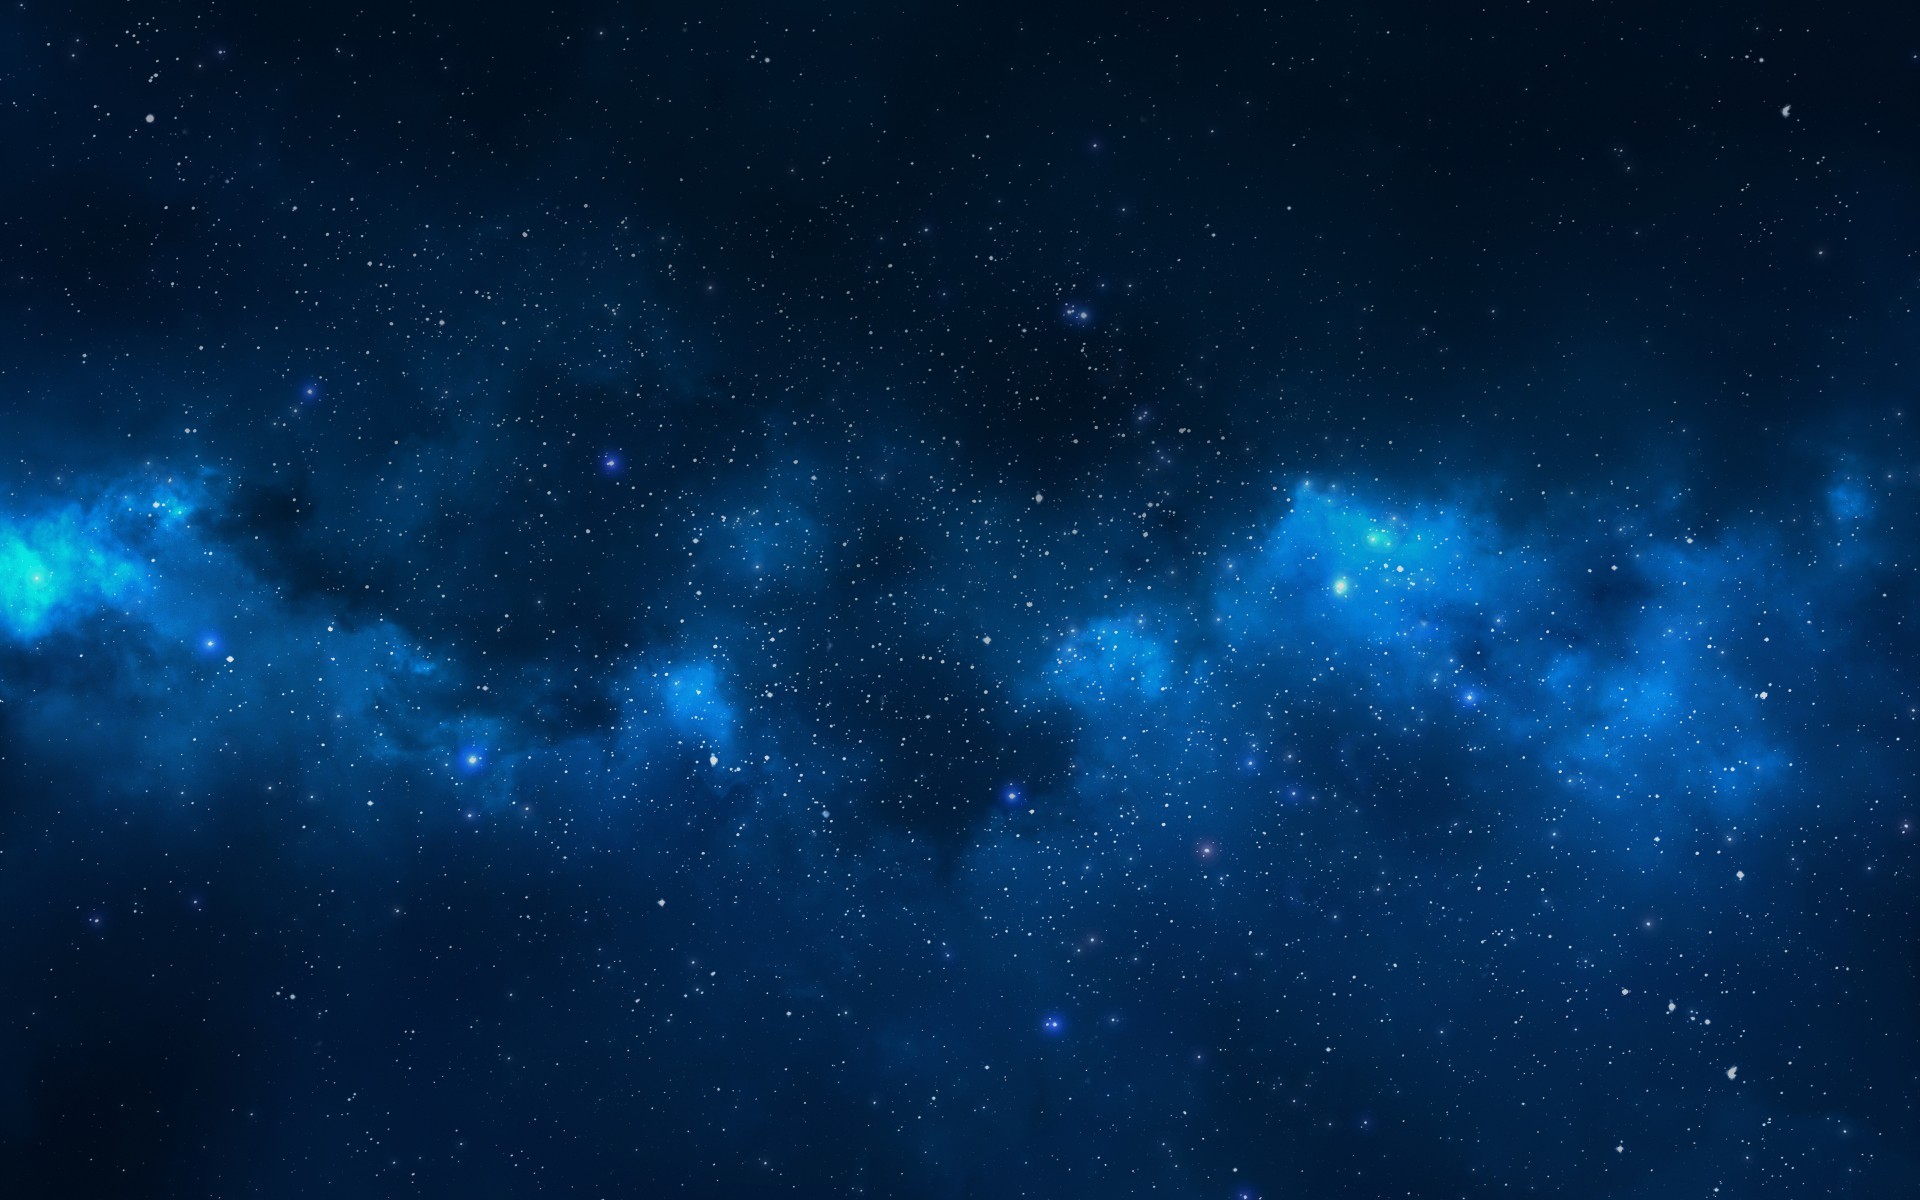 Nebula Night Sky Wallpaper   Pics about space